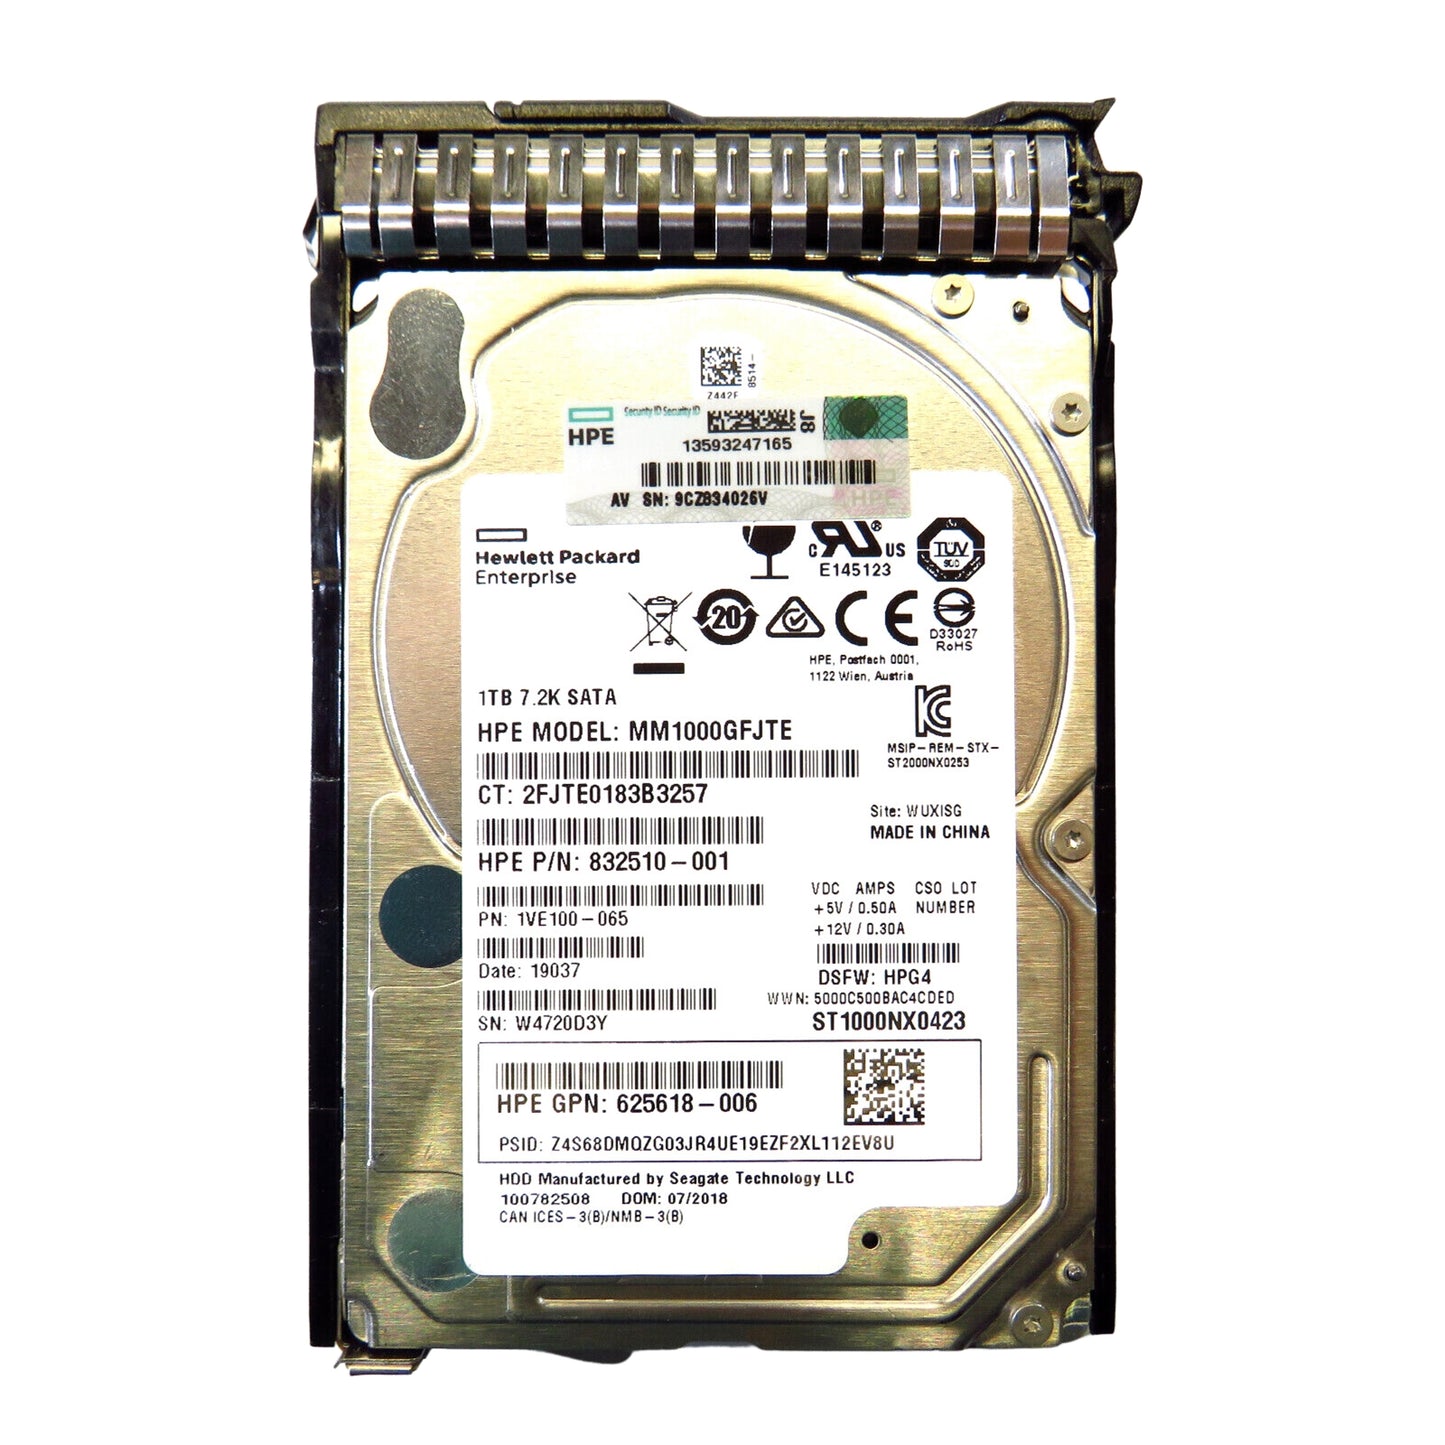 HP 656108-001 2.5" 1TB 7200RPM SATA III Hard Disk Drive (HDD), Silver (Refurbished)